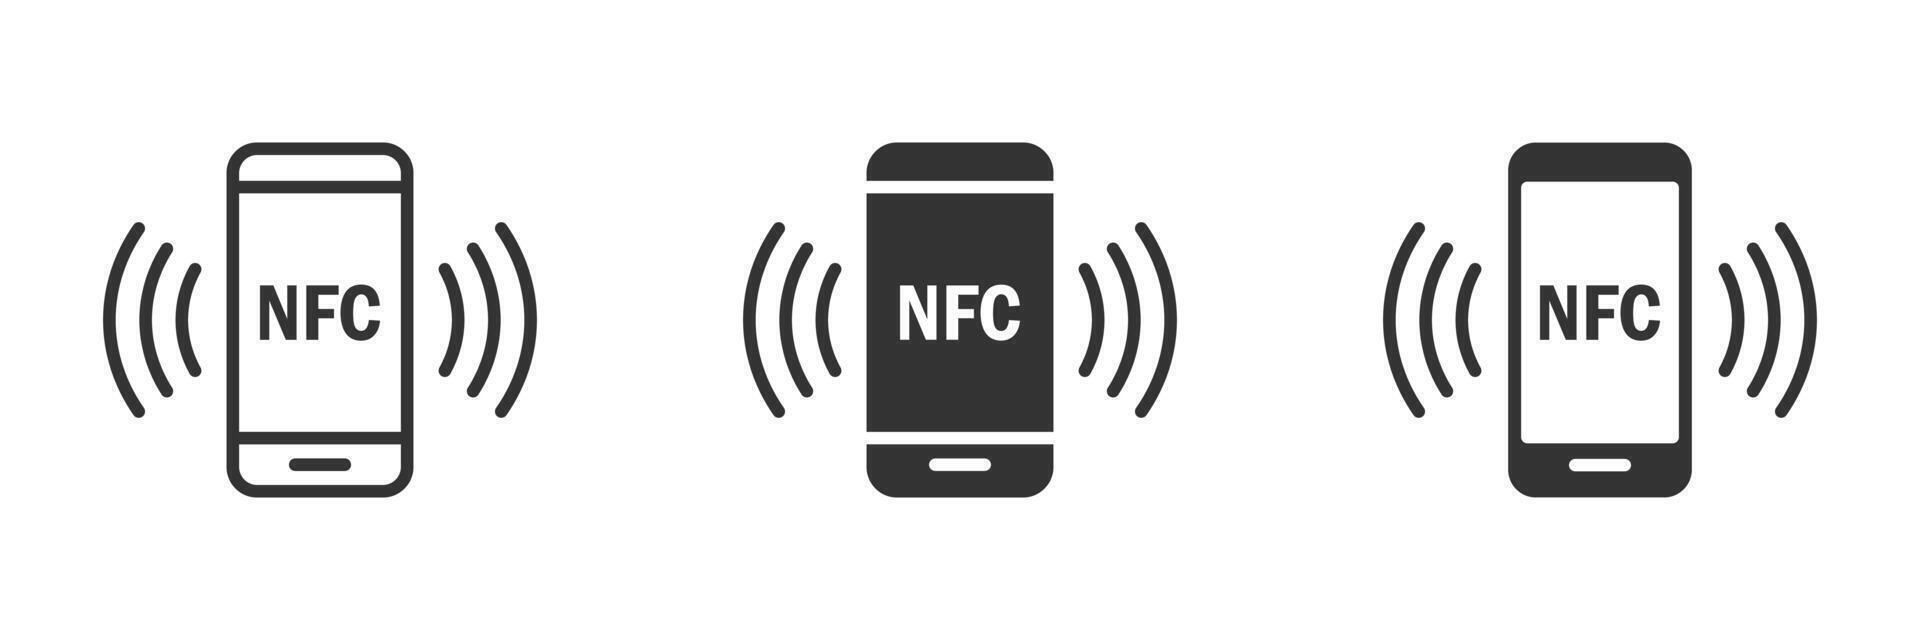 NFC technology icon. Vector illustration.